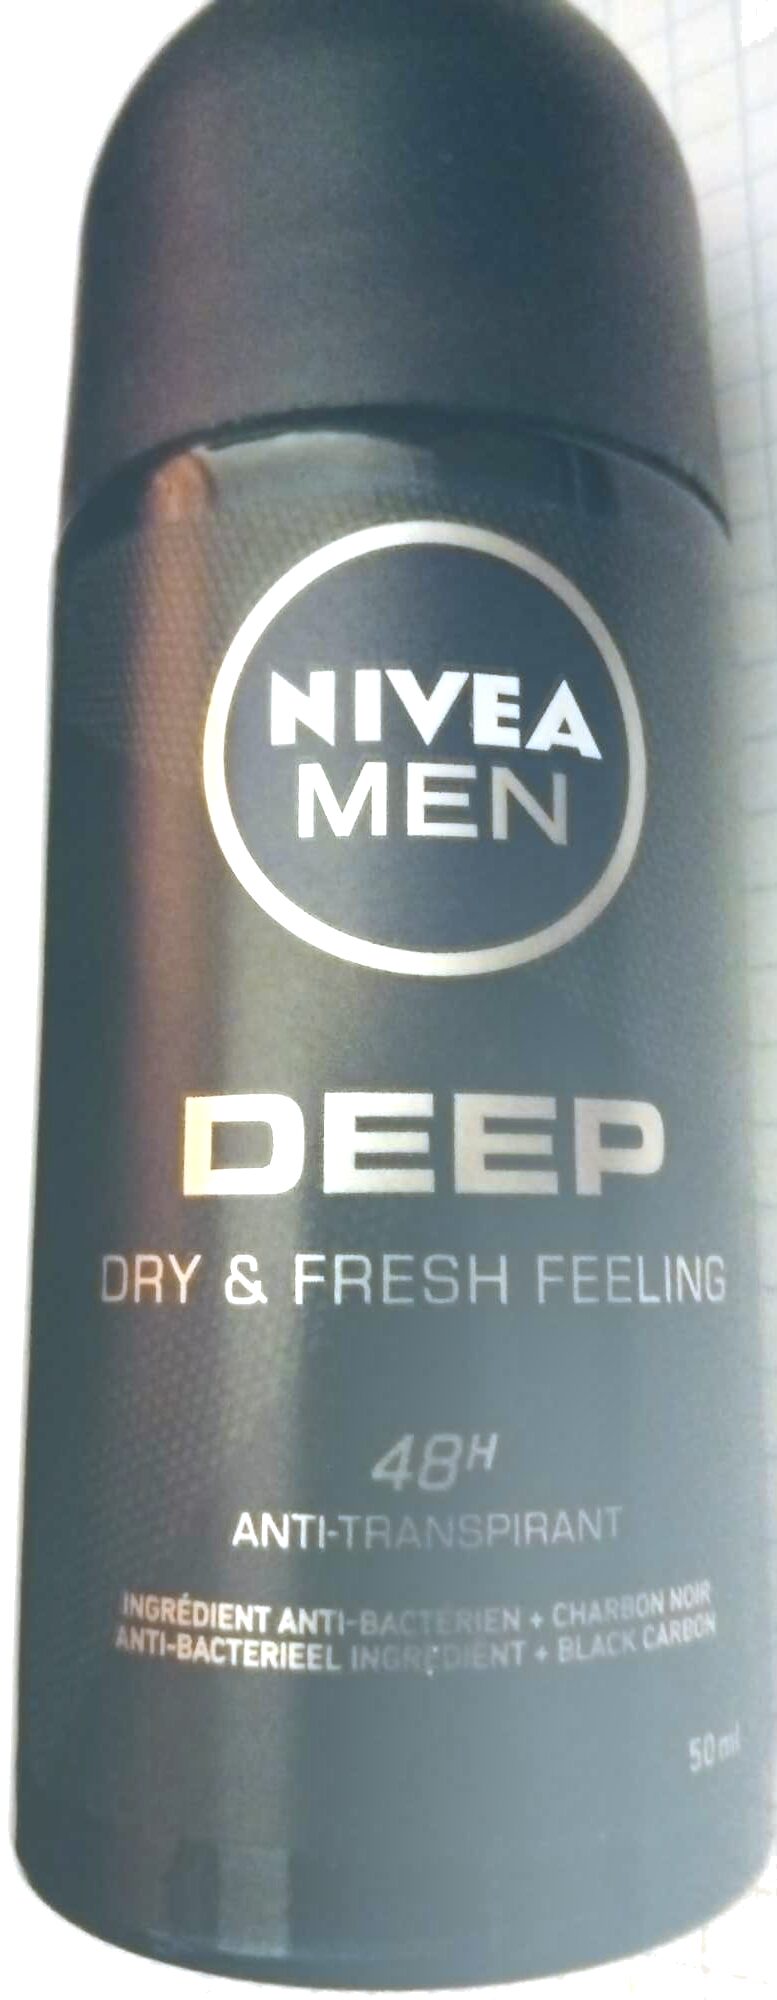 Deep Dry & Fresh Feeling 48h - Product - en